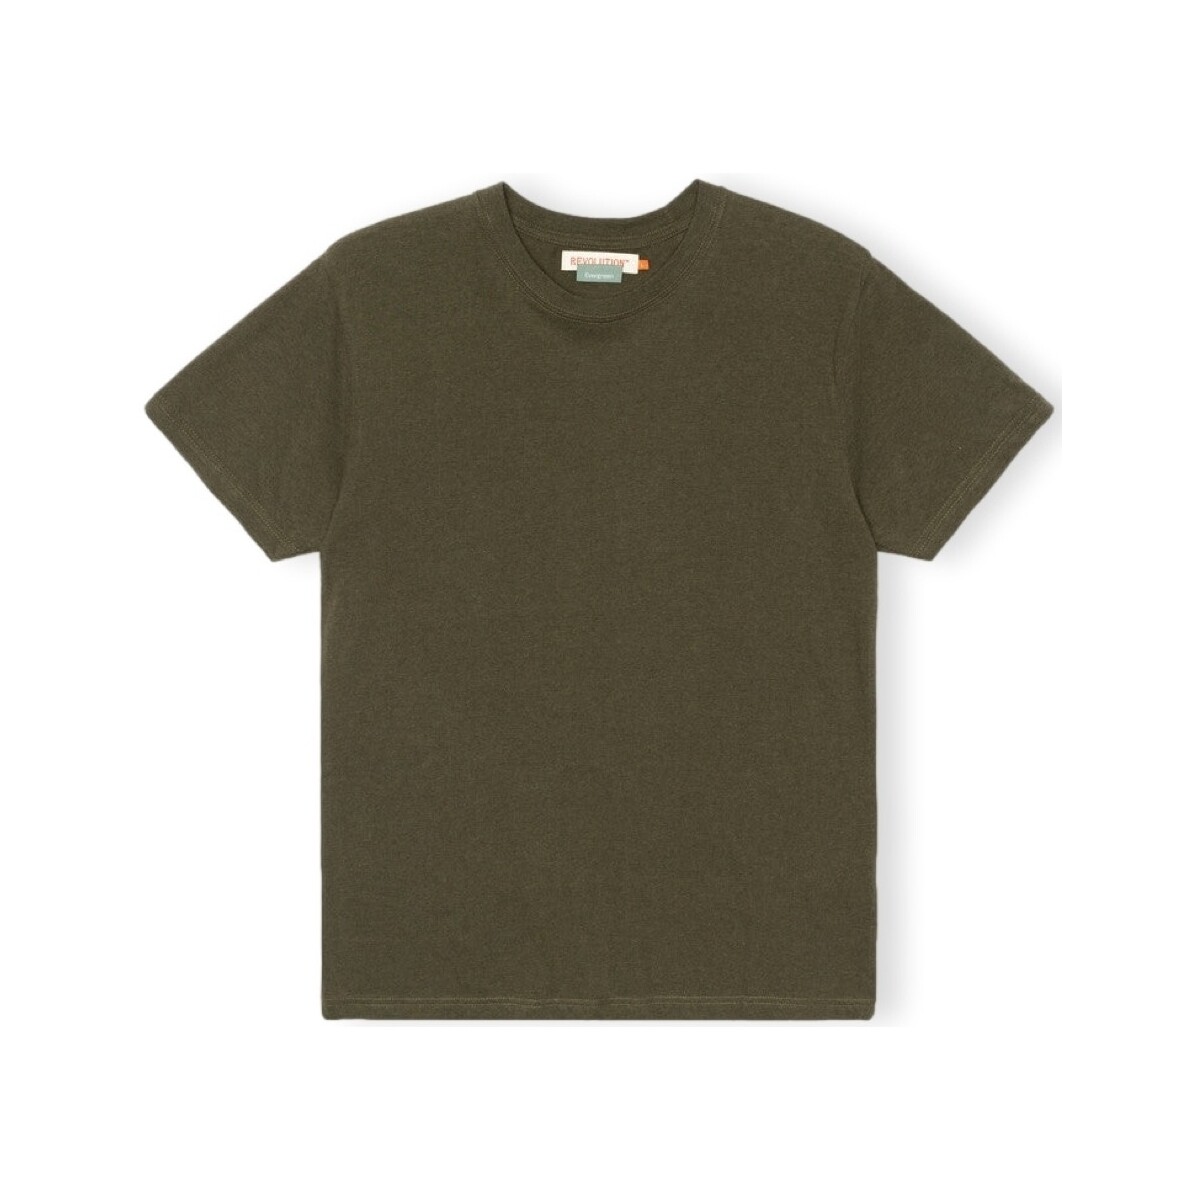 Kleidung Herren T-Shirts & Poloshirts Revolution T-Shirt Regular 1051 - Army/Melange Grün